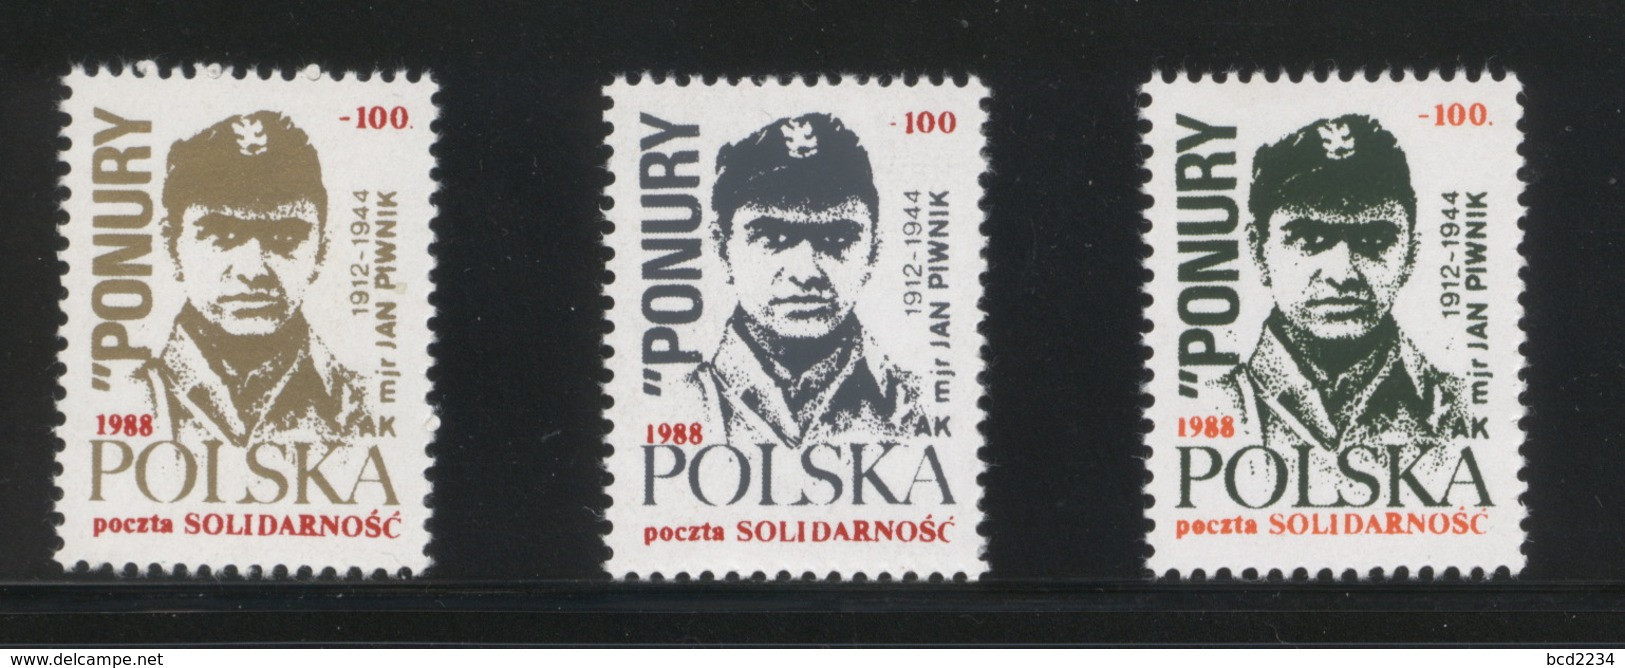 POLAND SOLIDARNOSC JAN PIWNIK WW2 POLICE & SOLDIER AGAINST NAZI GERMANY & RUSSIA SET OF 3 GOVT EXILE FRANCE POLISH ARMY - Solidarnosc Labels